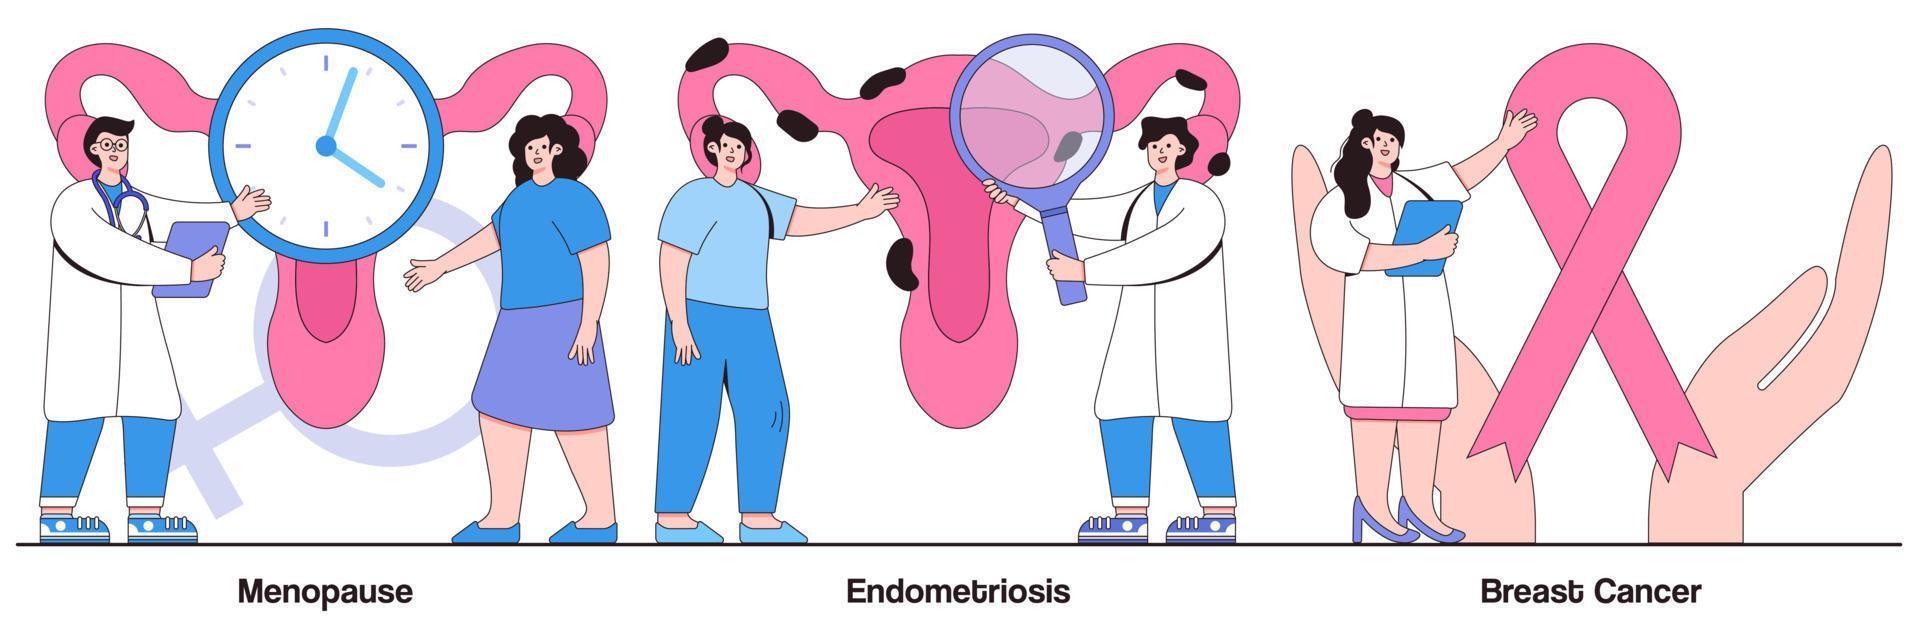 menopauze, endometriose en borstkanker geïllustreerd pakket vector